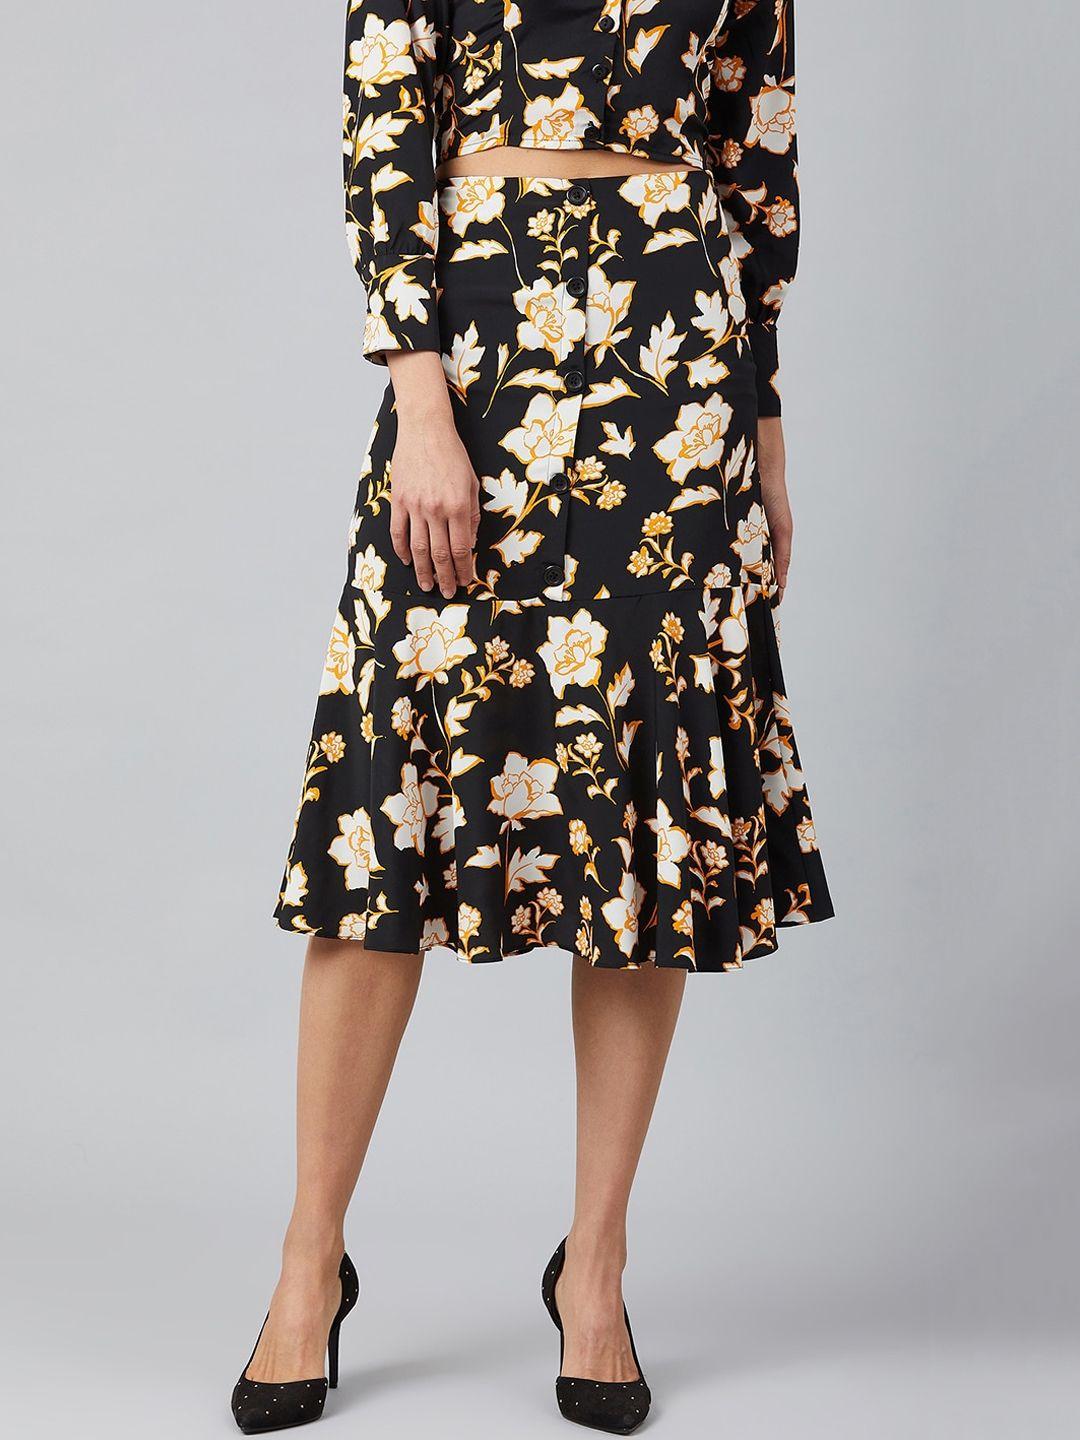 carlton-london-women-black-&-white-floral-printed-trumpet-midi-skirt